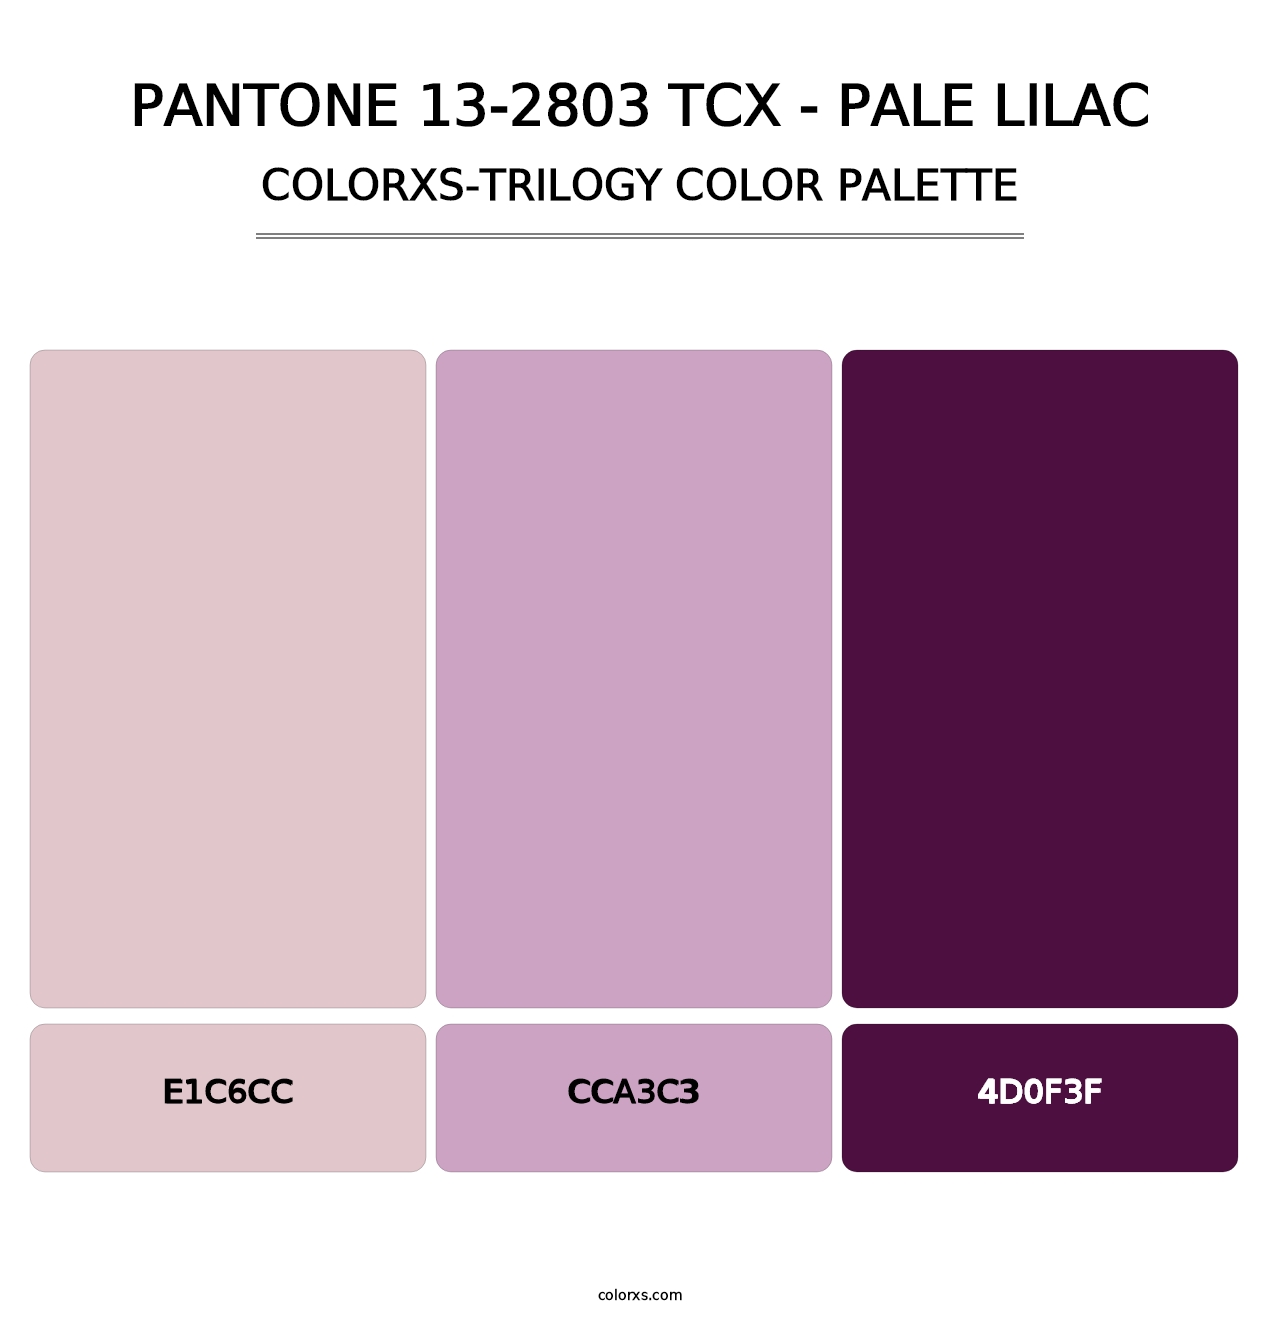 PANTONE 13-2803 TCX - Pale Lilac - Colorxs Trilogy Palette